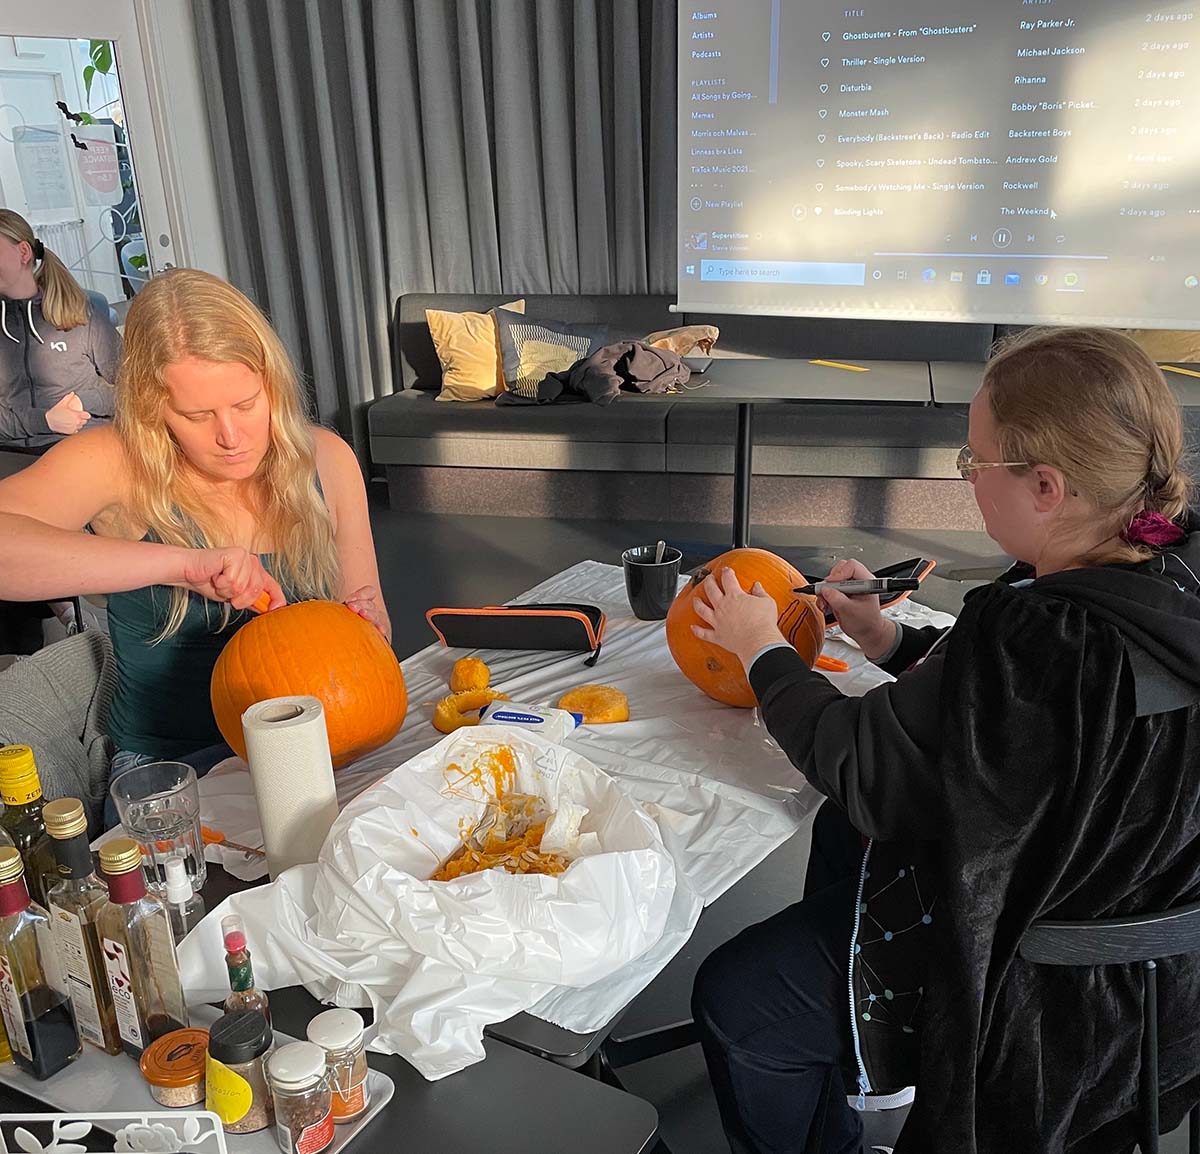 two people carving pumpkins